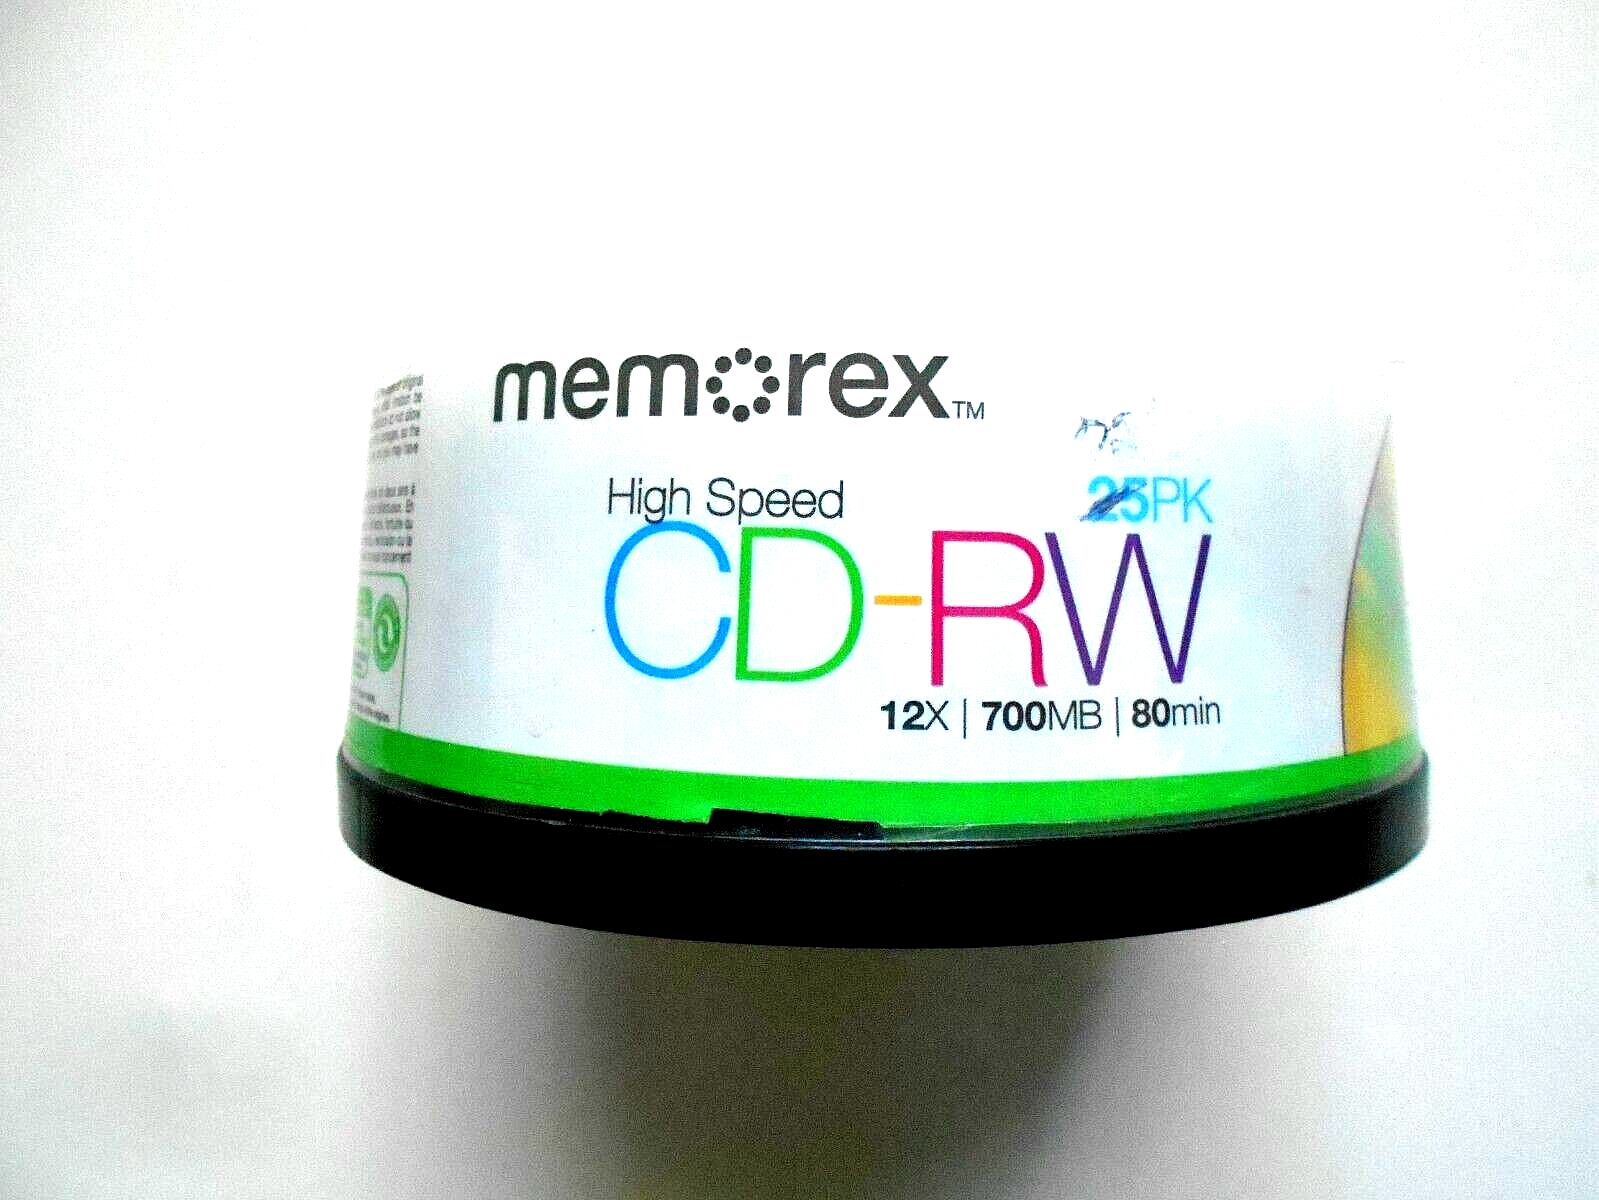 Memorex High Speed CD-RW 12X 700MB 80 min. 22 PK - $6.92